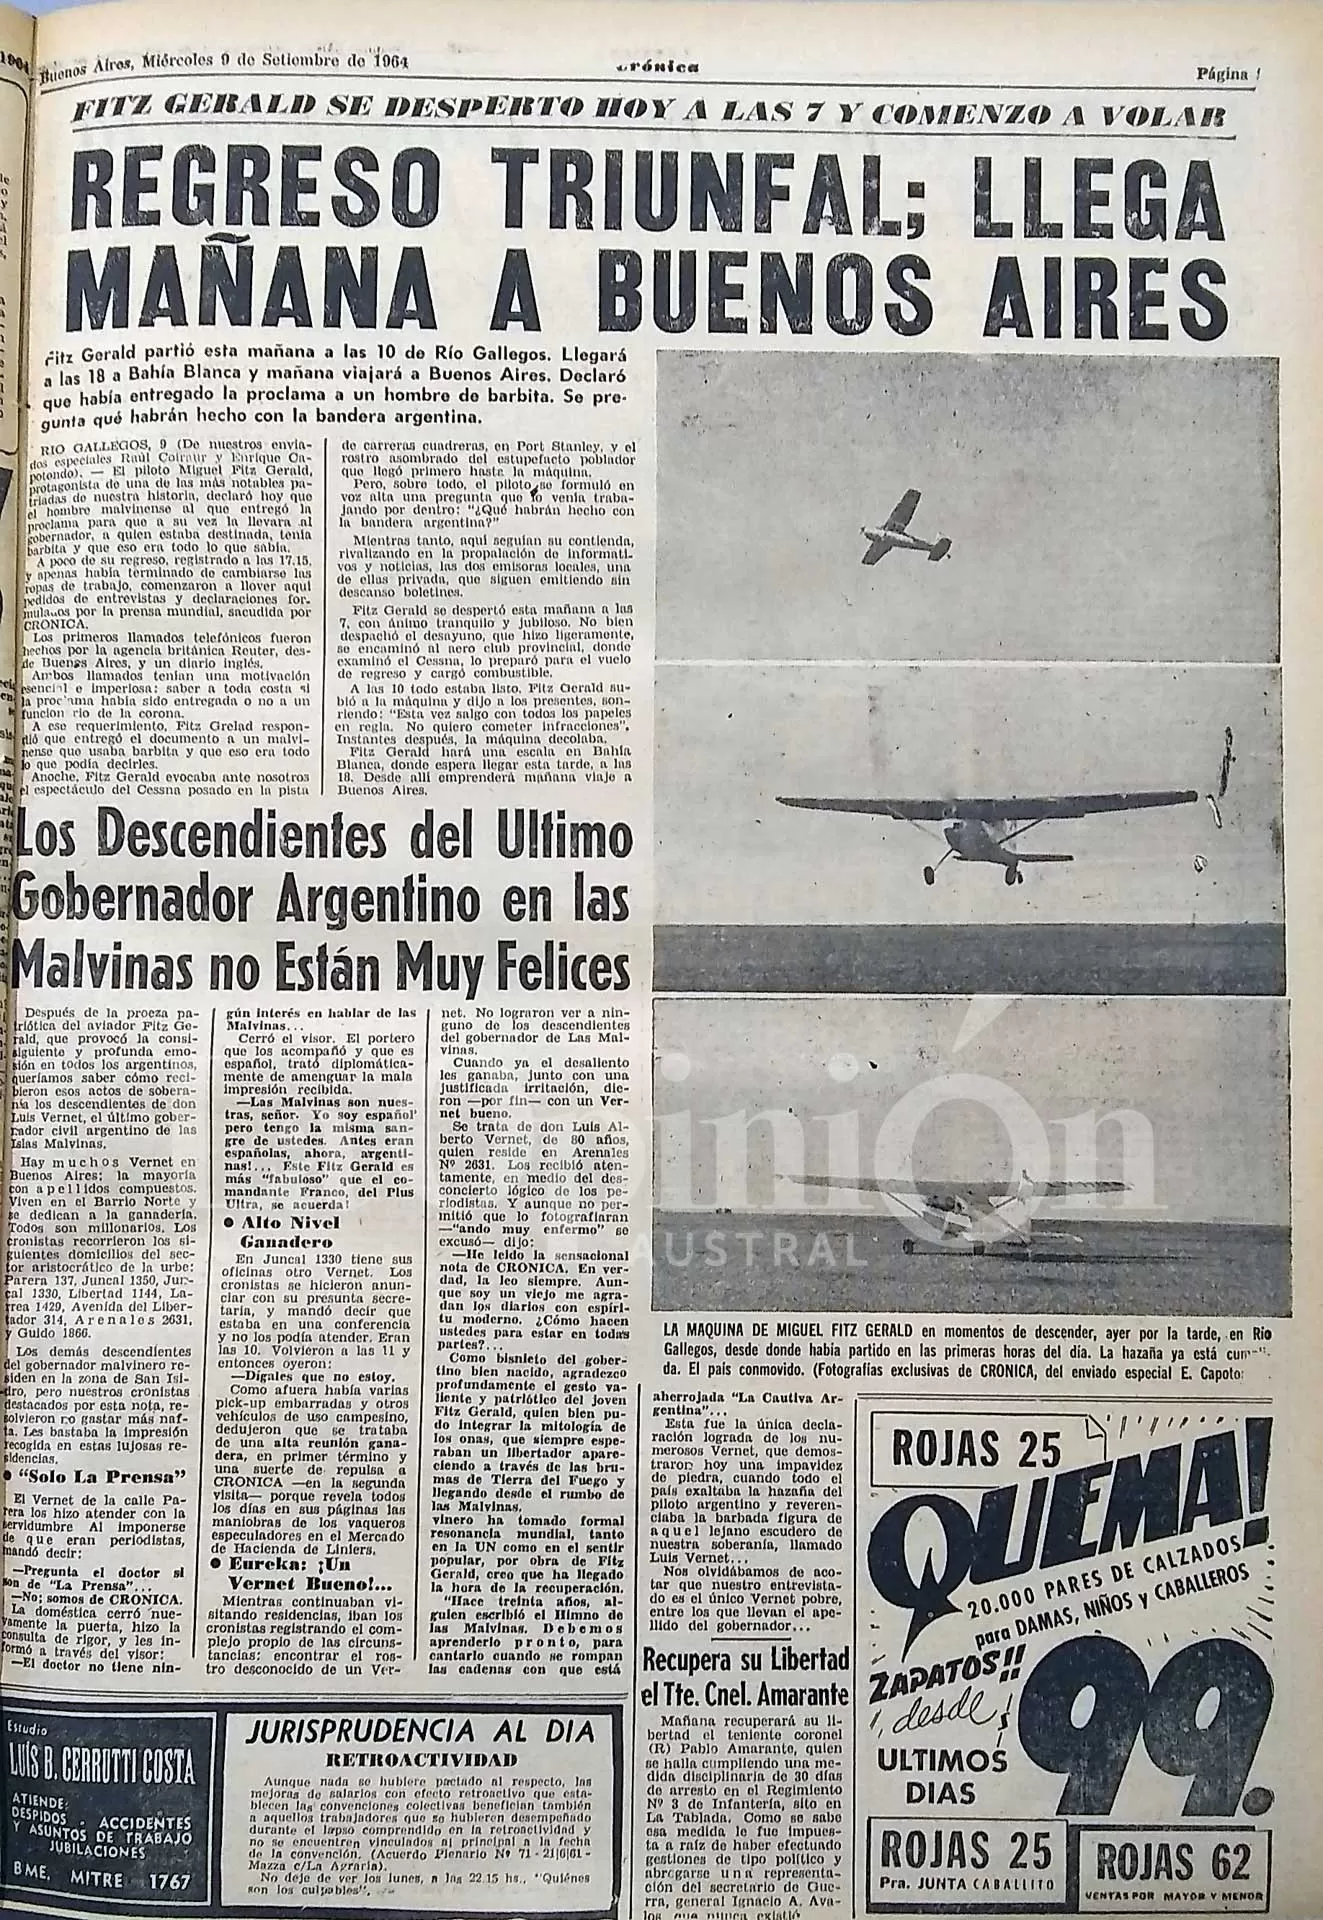 Titular del Diario Crónica del 9 de septiembre de 1964 sobre Fitzgerald: "Regreso triunfal, llega mañana a Buenos Aires". FOTO: DIARIO CRÓNICA